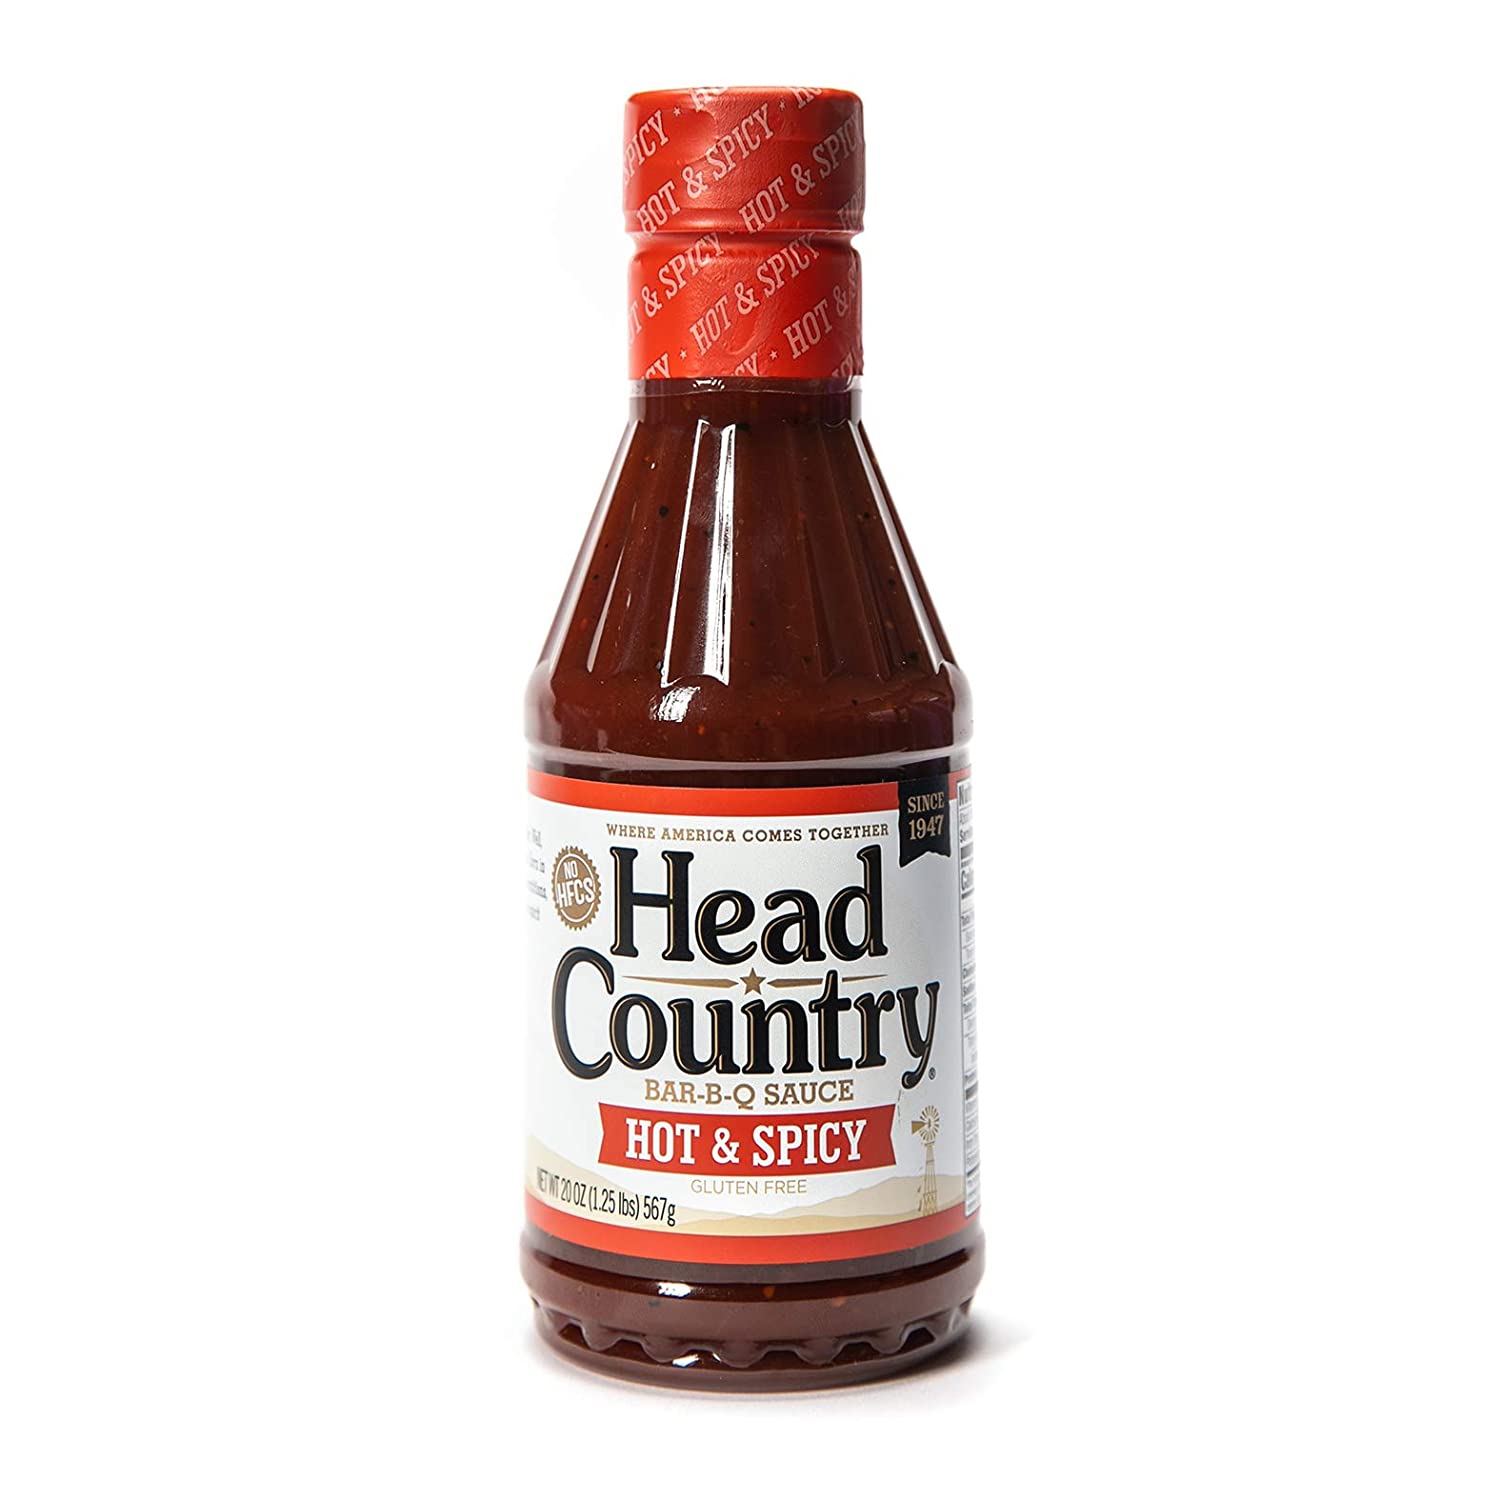 Head Country Bar-B-Q Sauce, Hot & Spicy